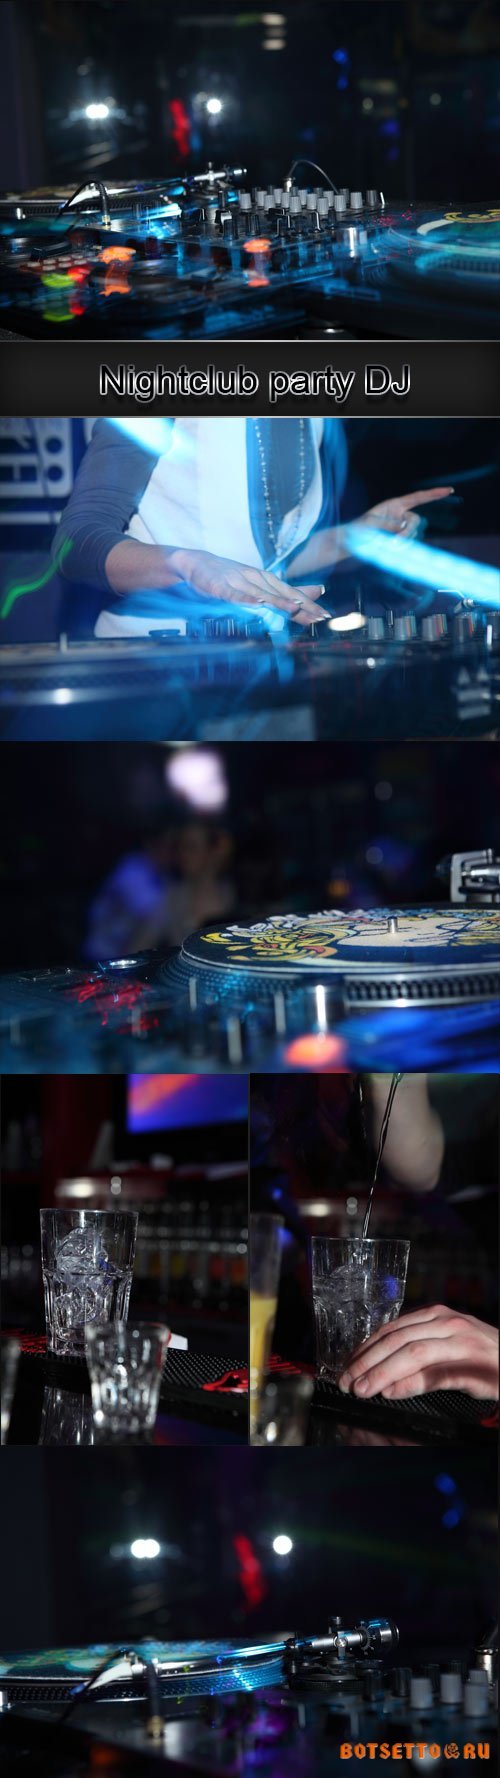 Nightclub party DJ